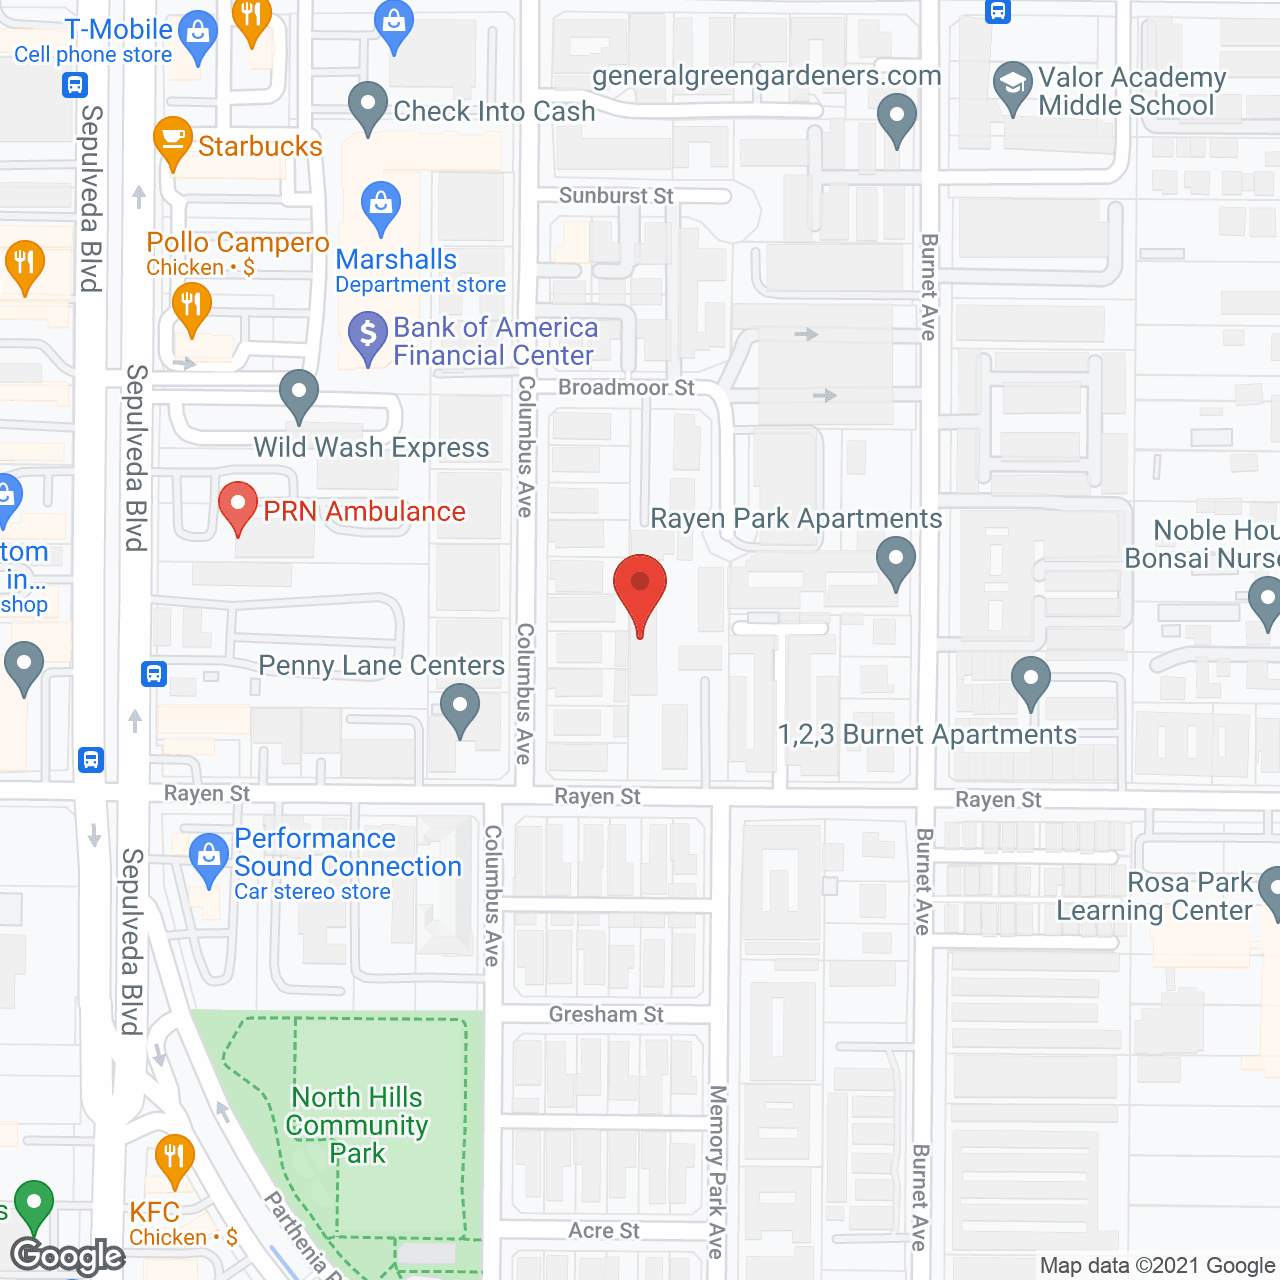 Rayen Park Apartments in google map